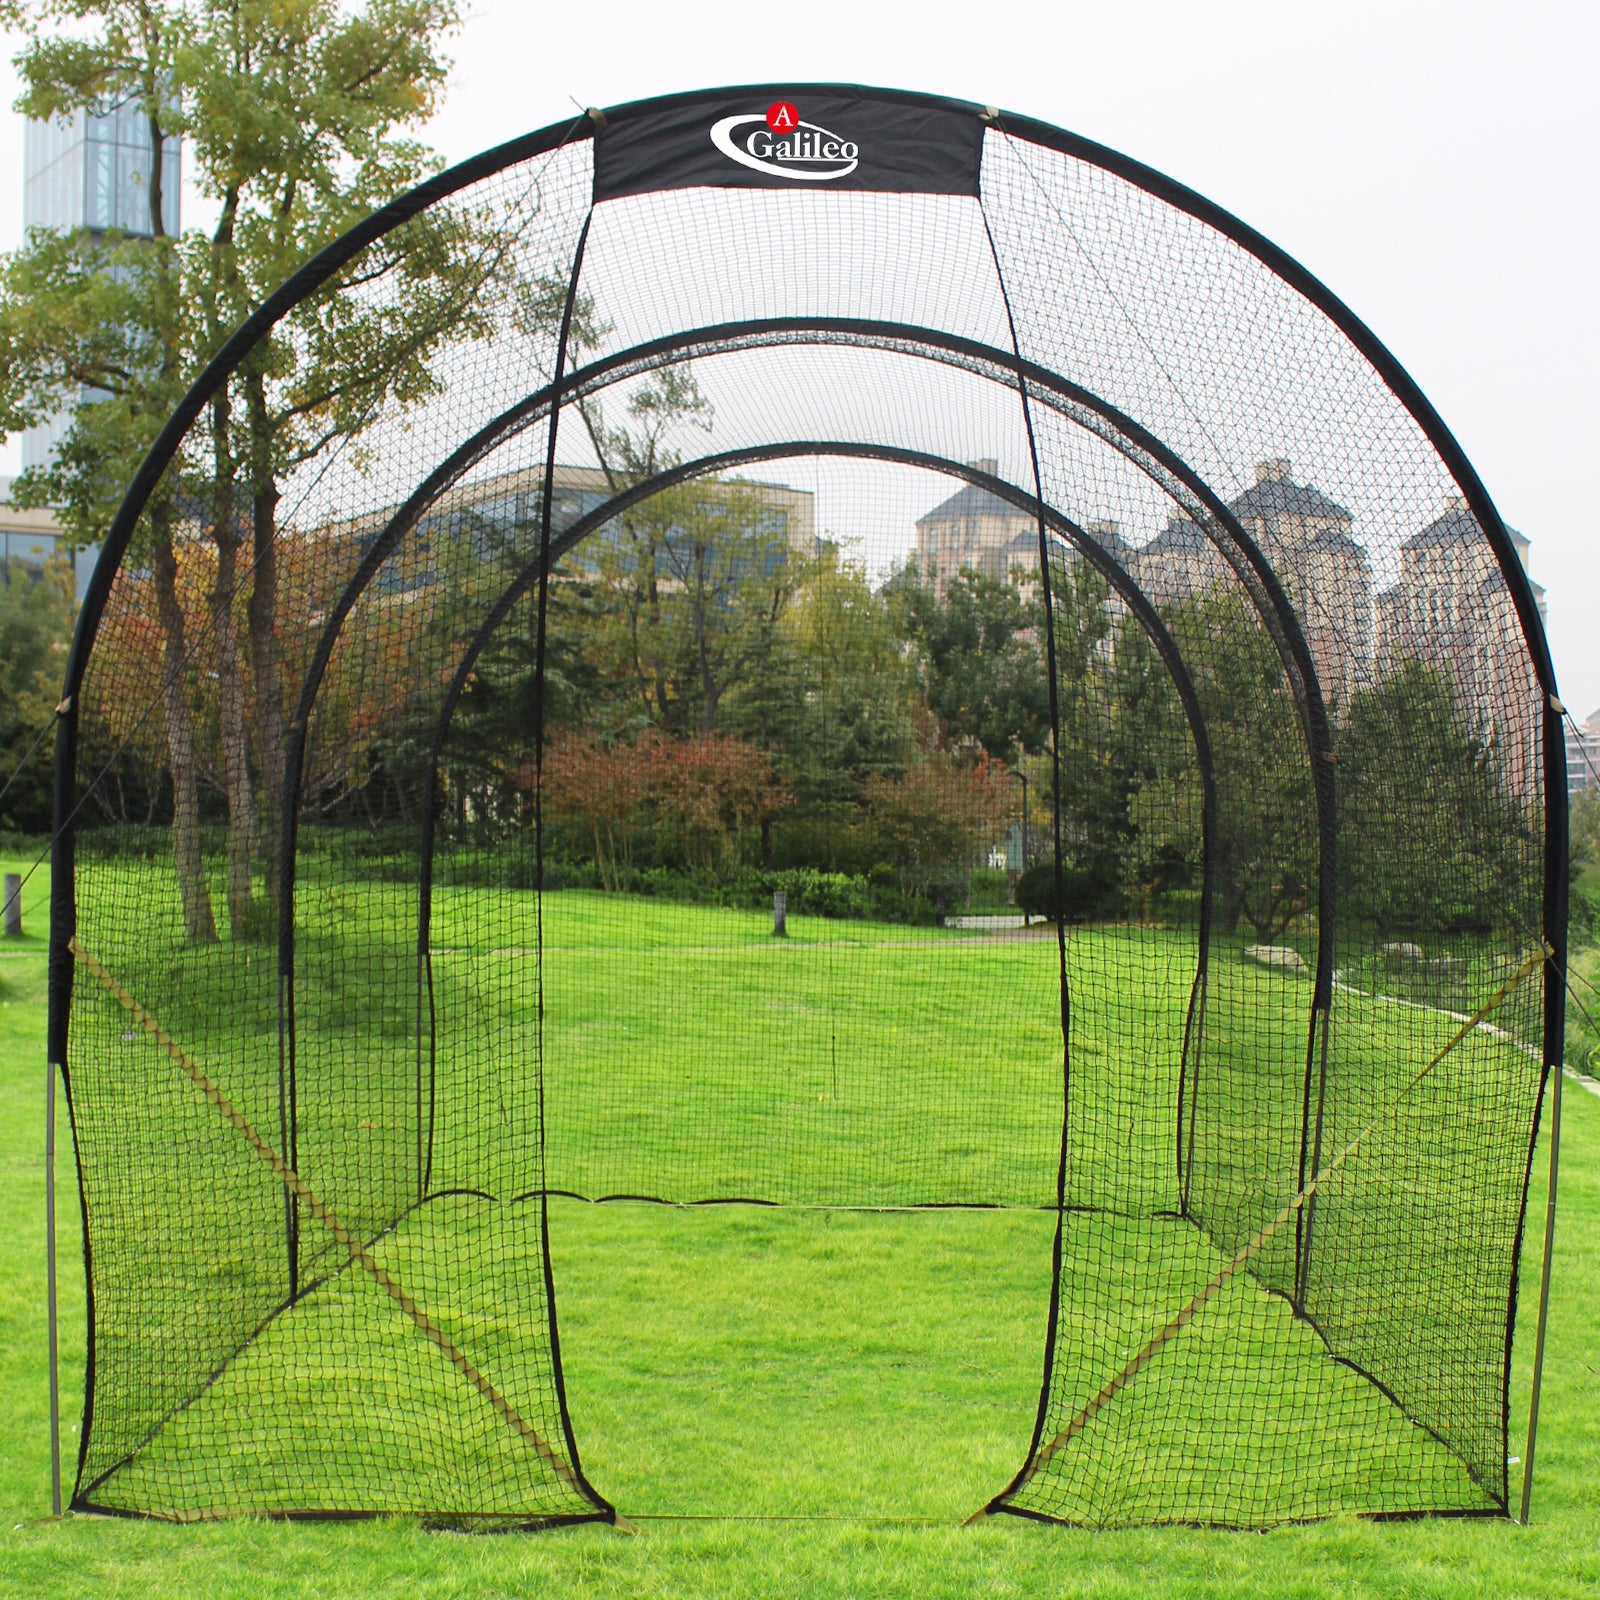 Galileo16X10X10 Baseball Softball Batting Cage/Backyard/Kids gift